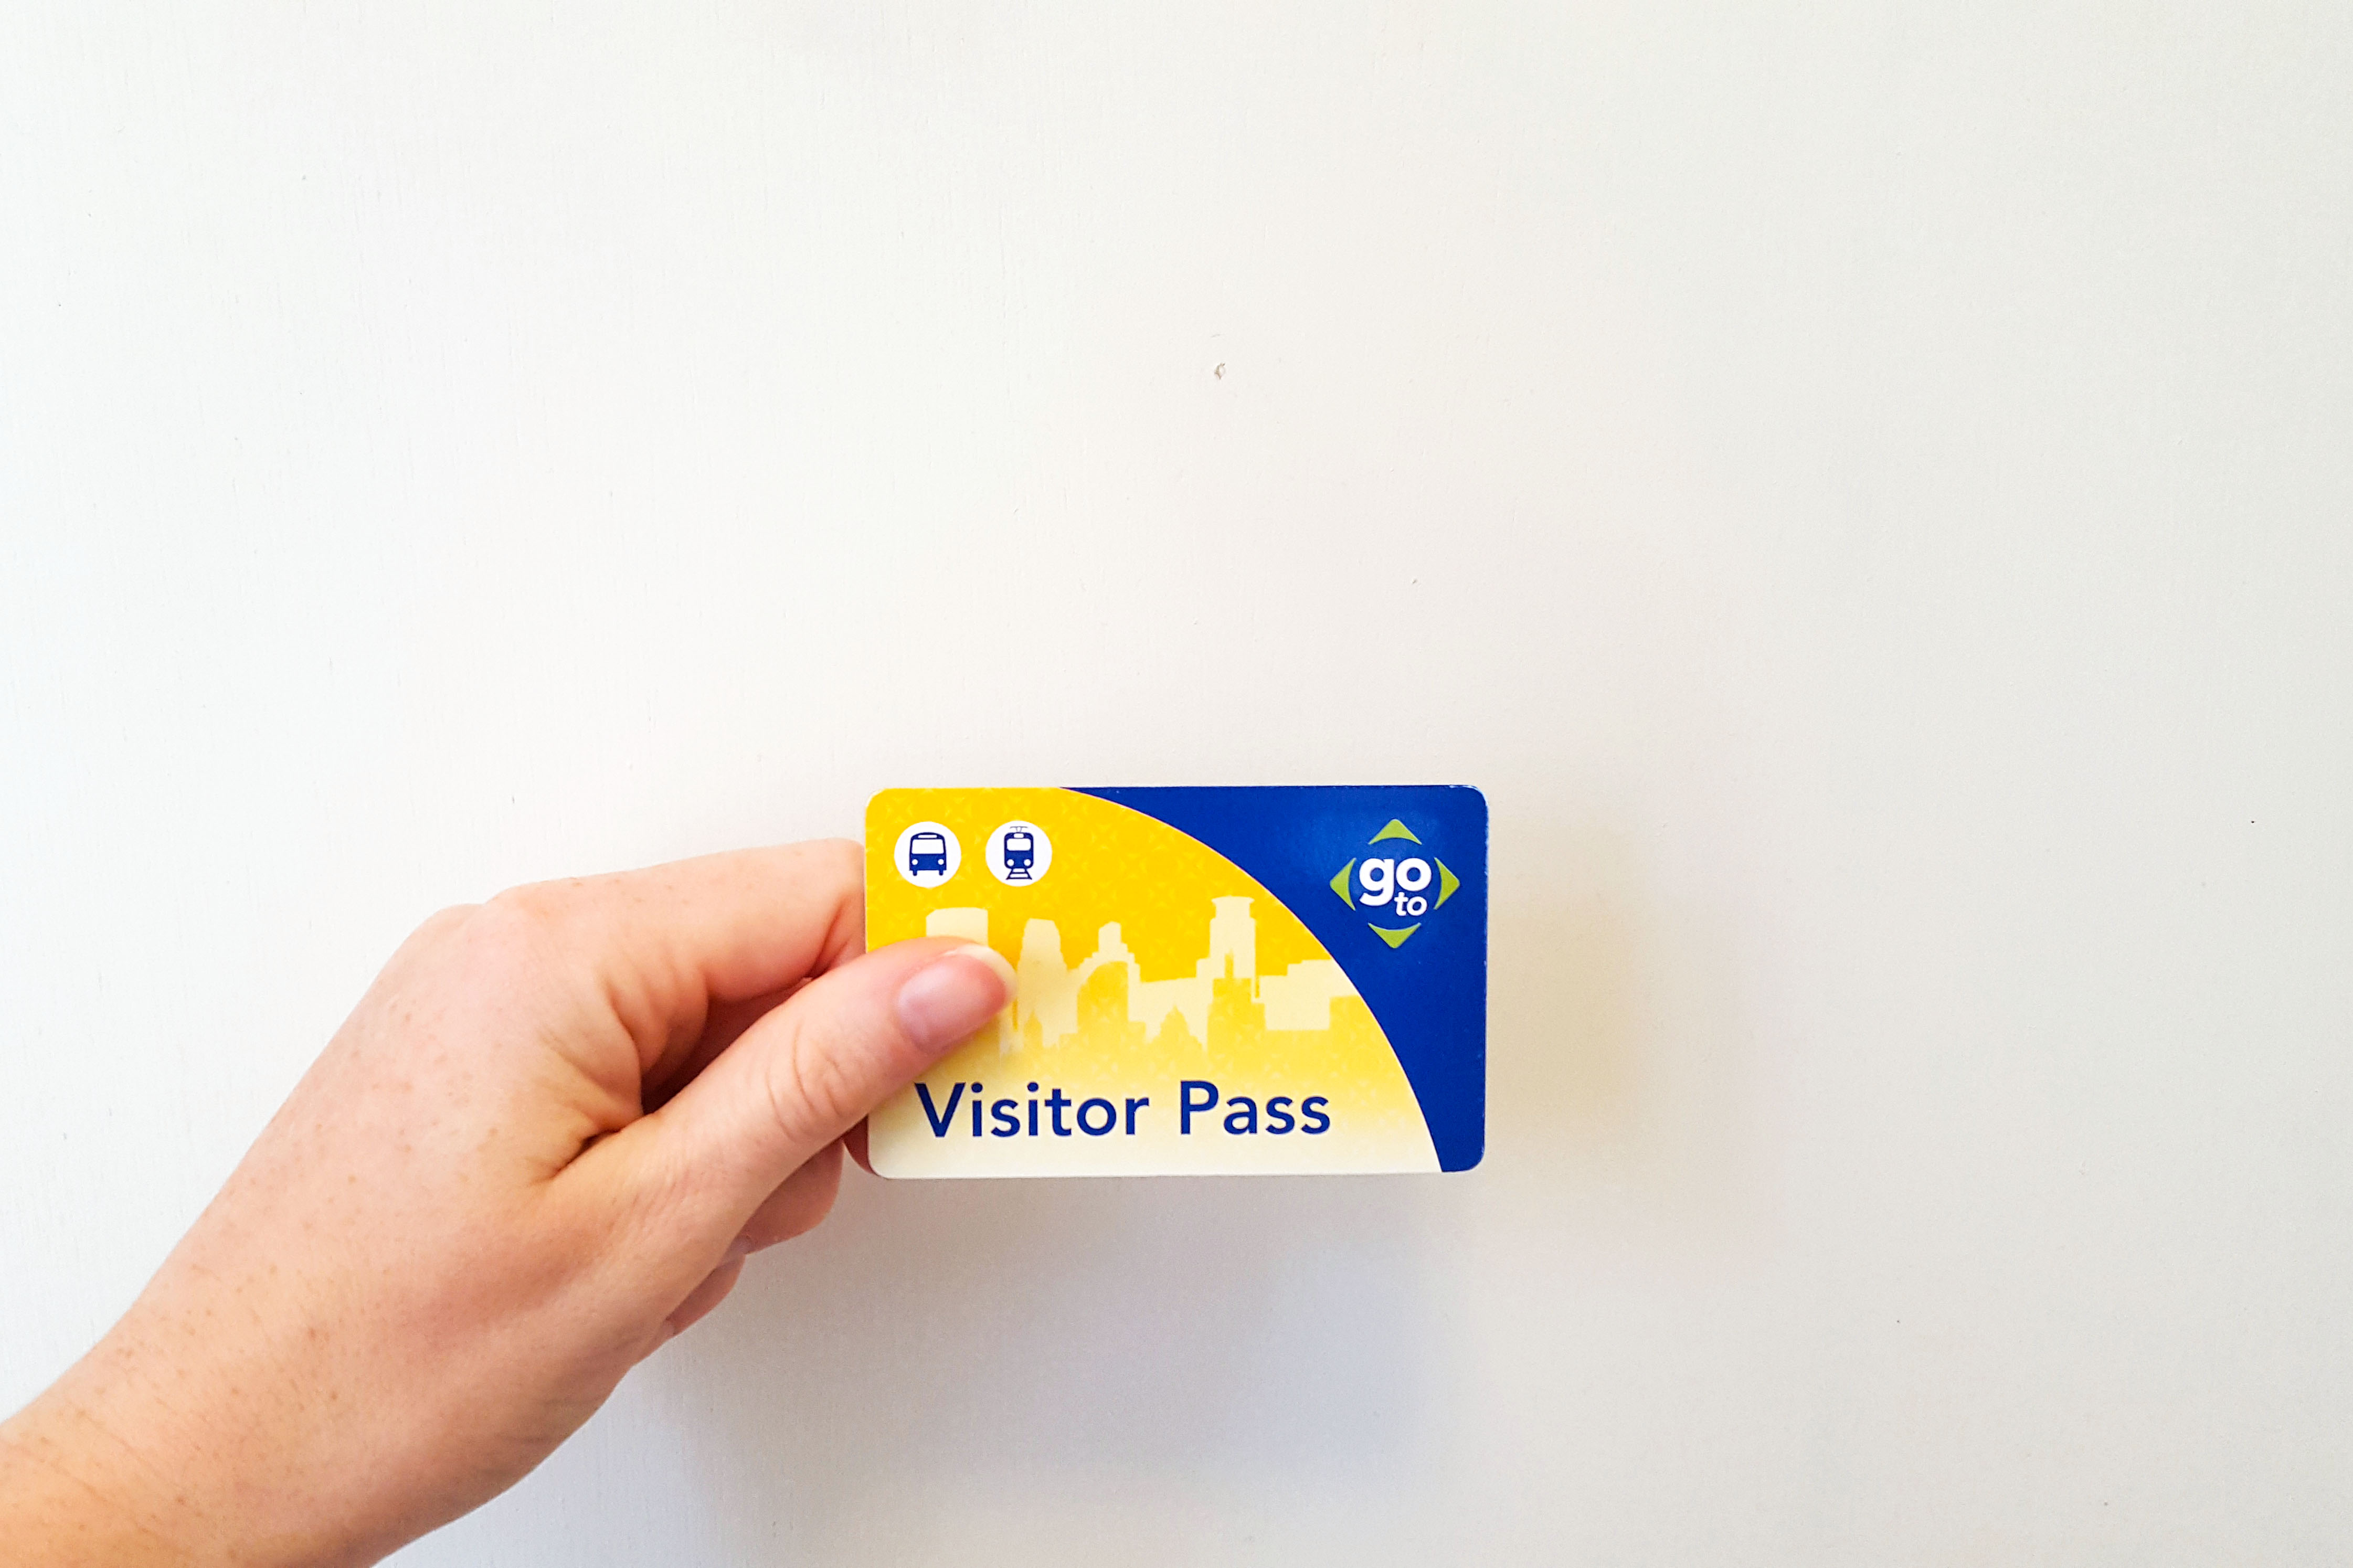 Krystal holding a visitor pass transit card